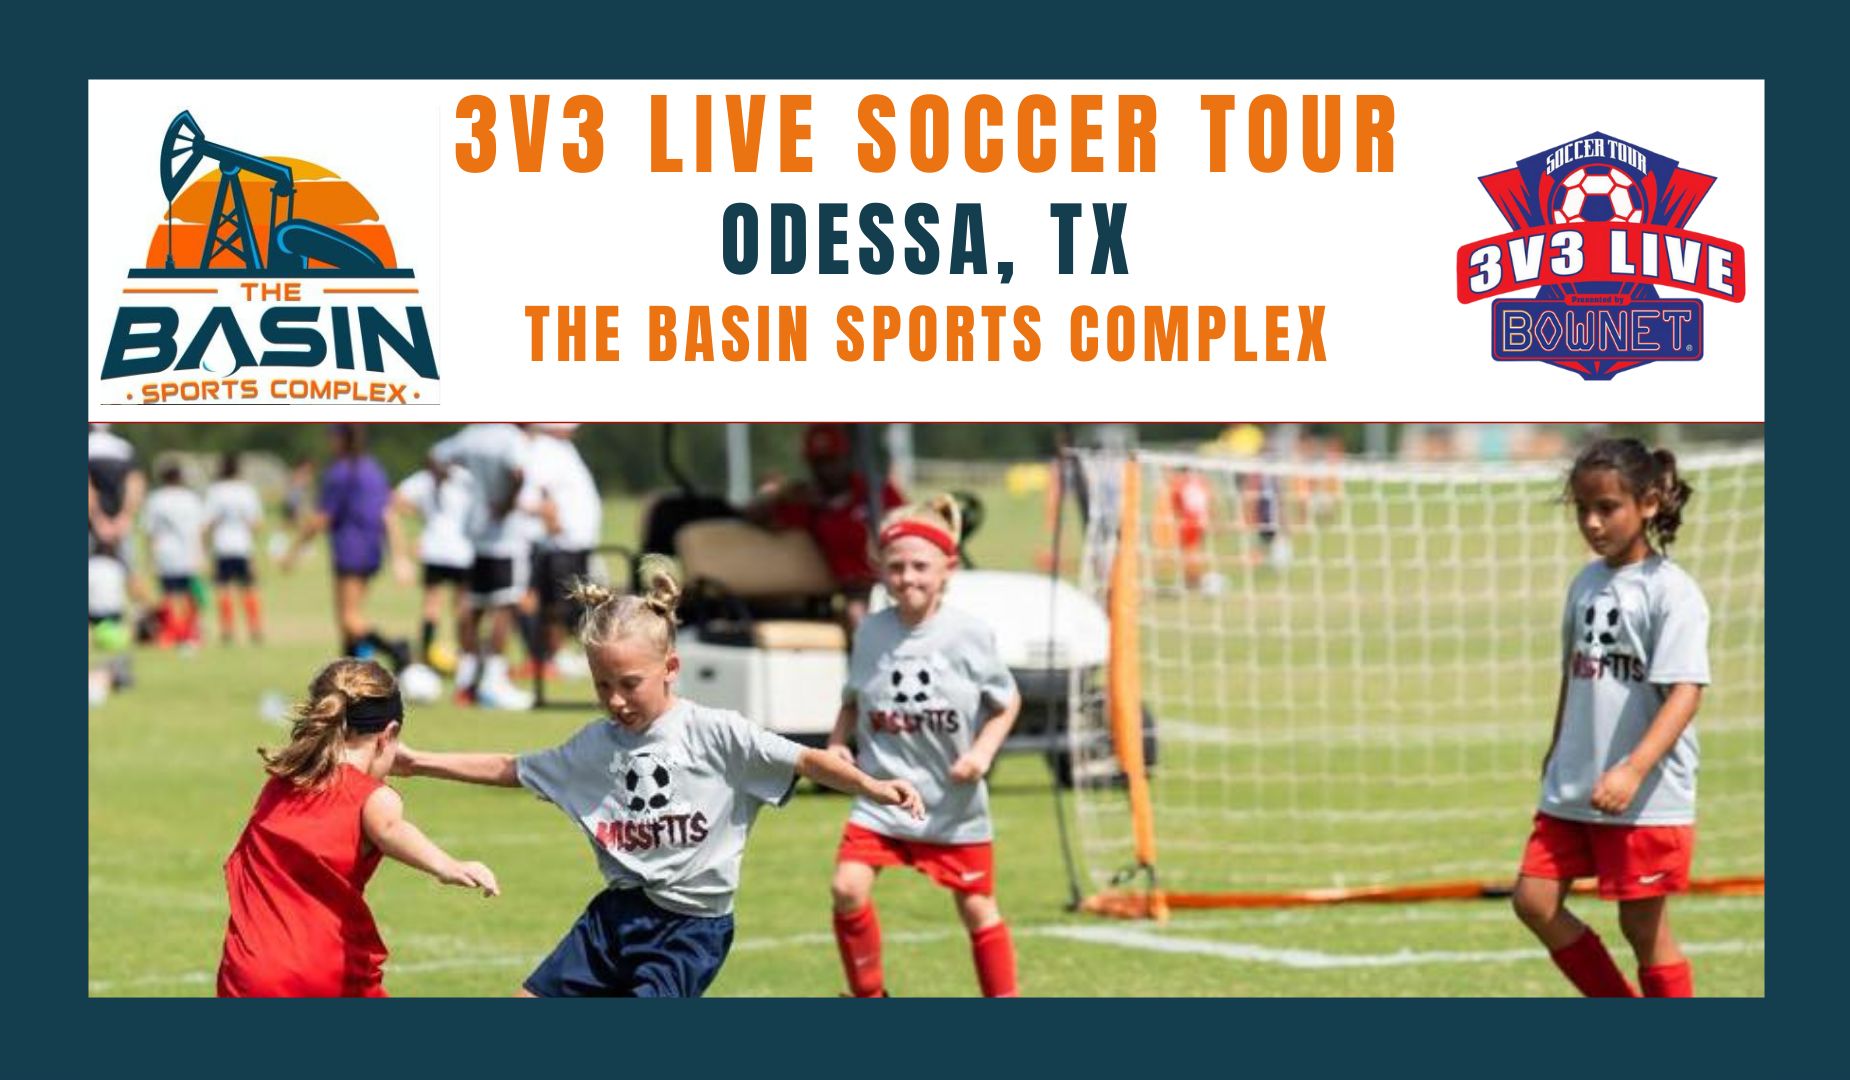 3v3 Live Soccer Tour in Odessa, TX